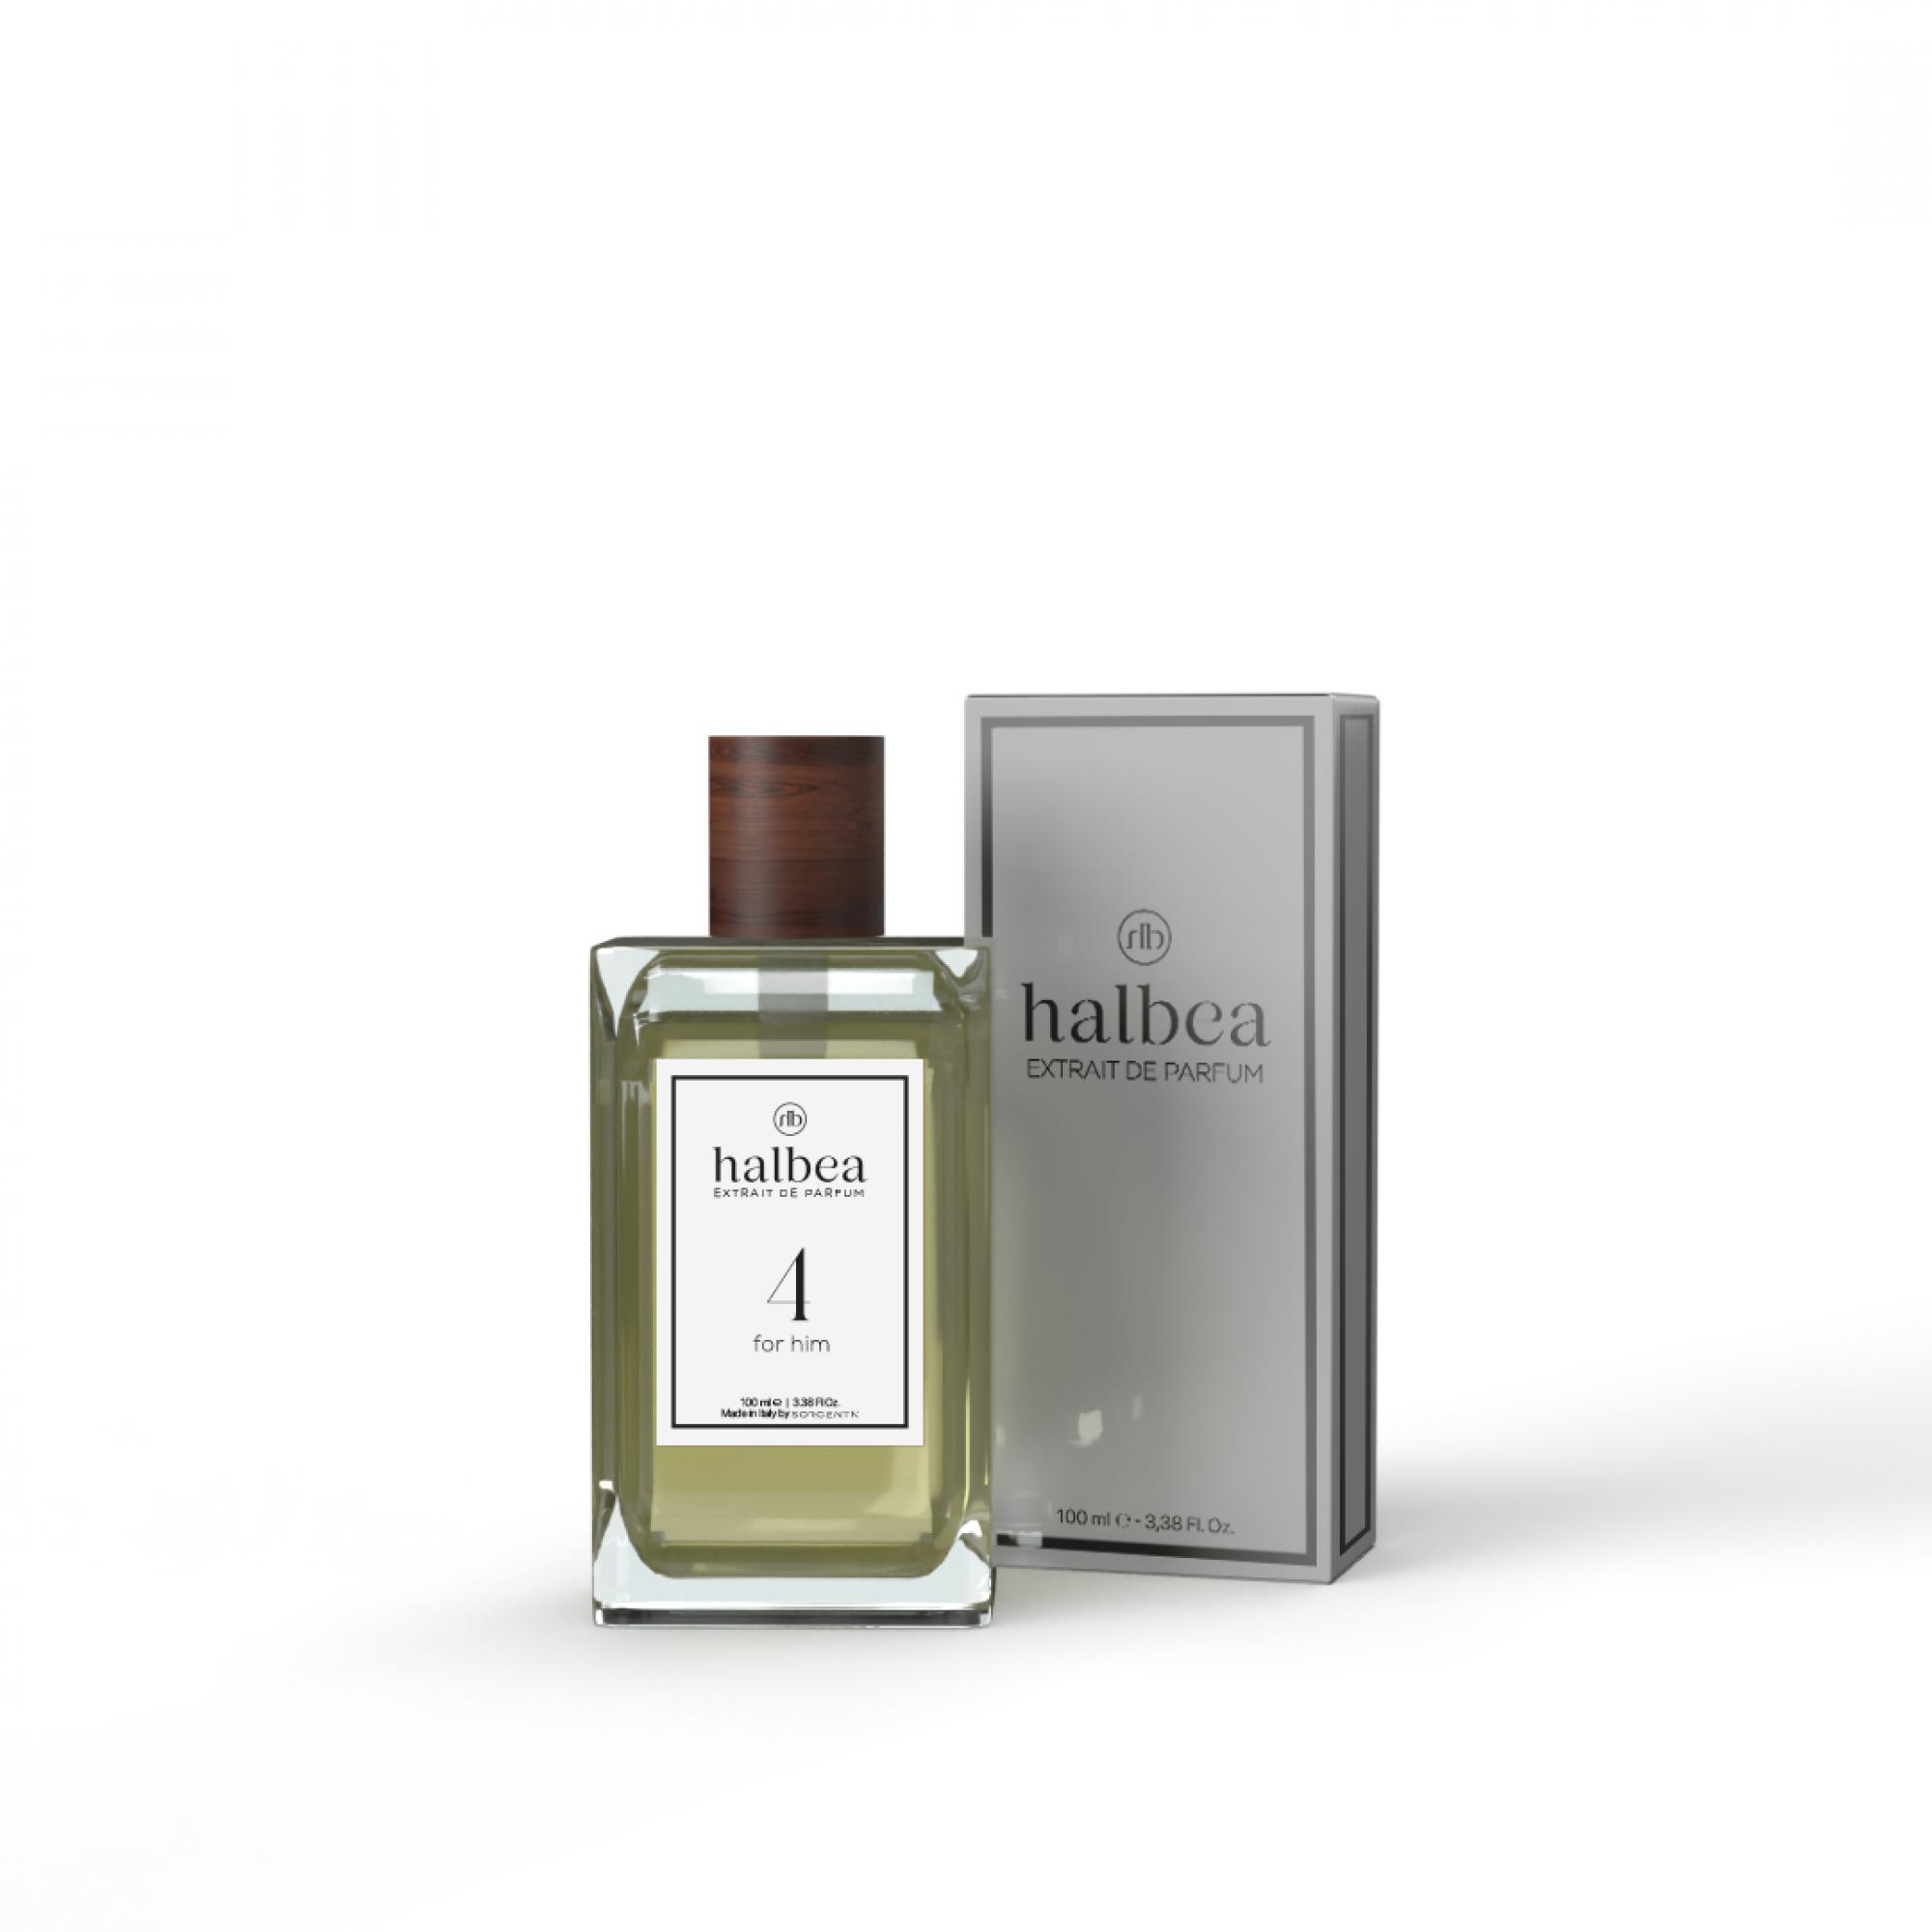 Halbea Parfum Nr. 4 insp. by Le Male J.P. Gaultier 100ml